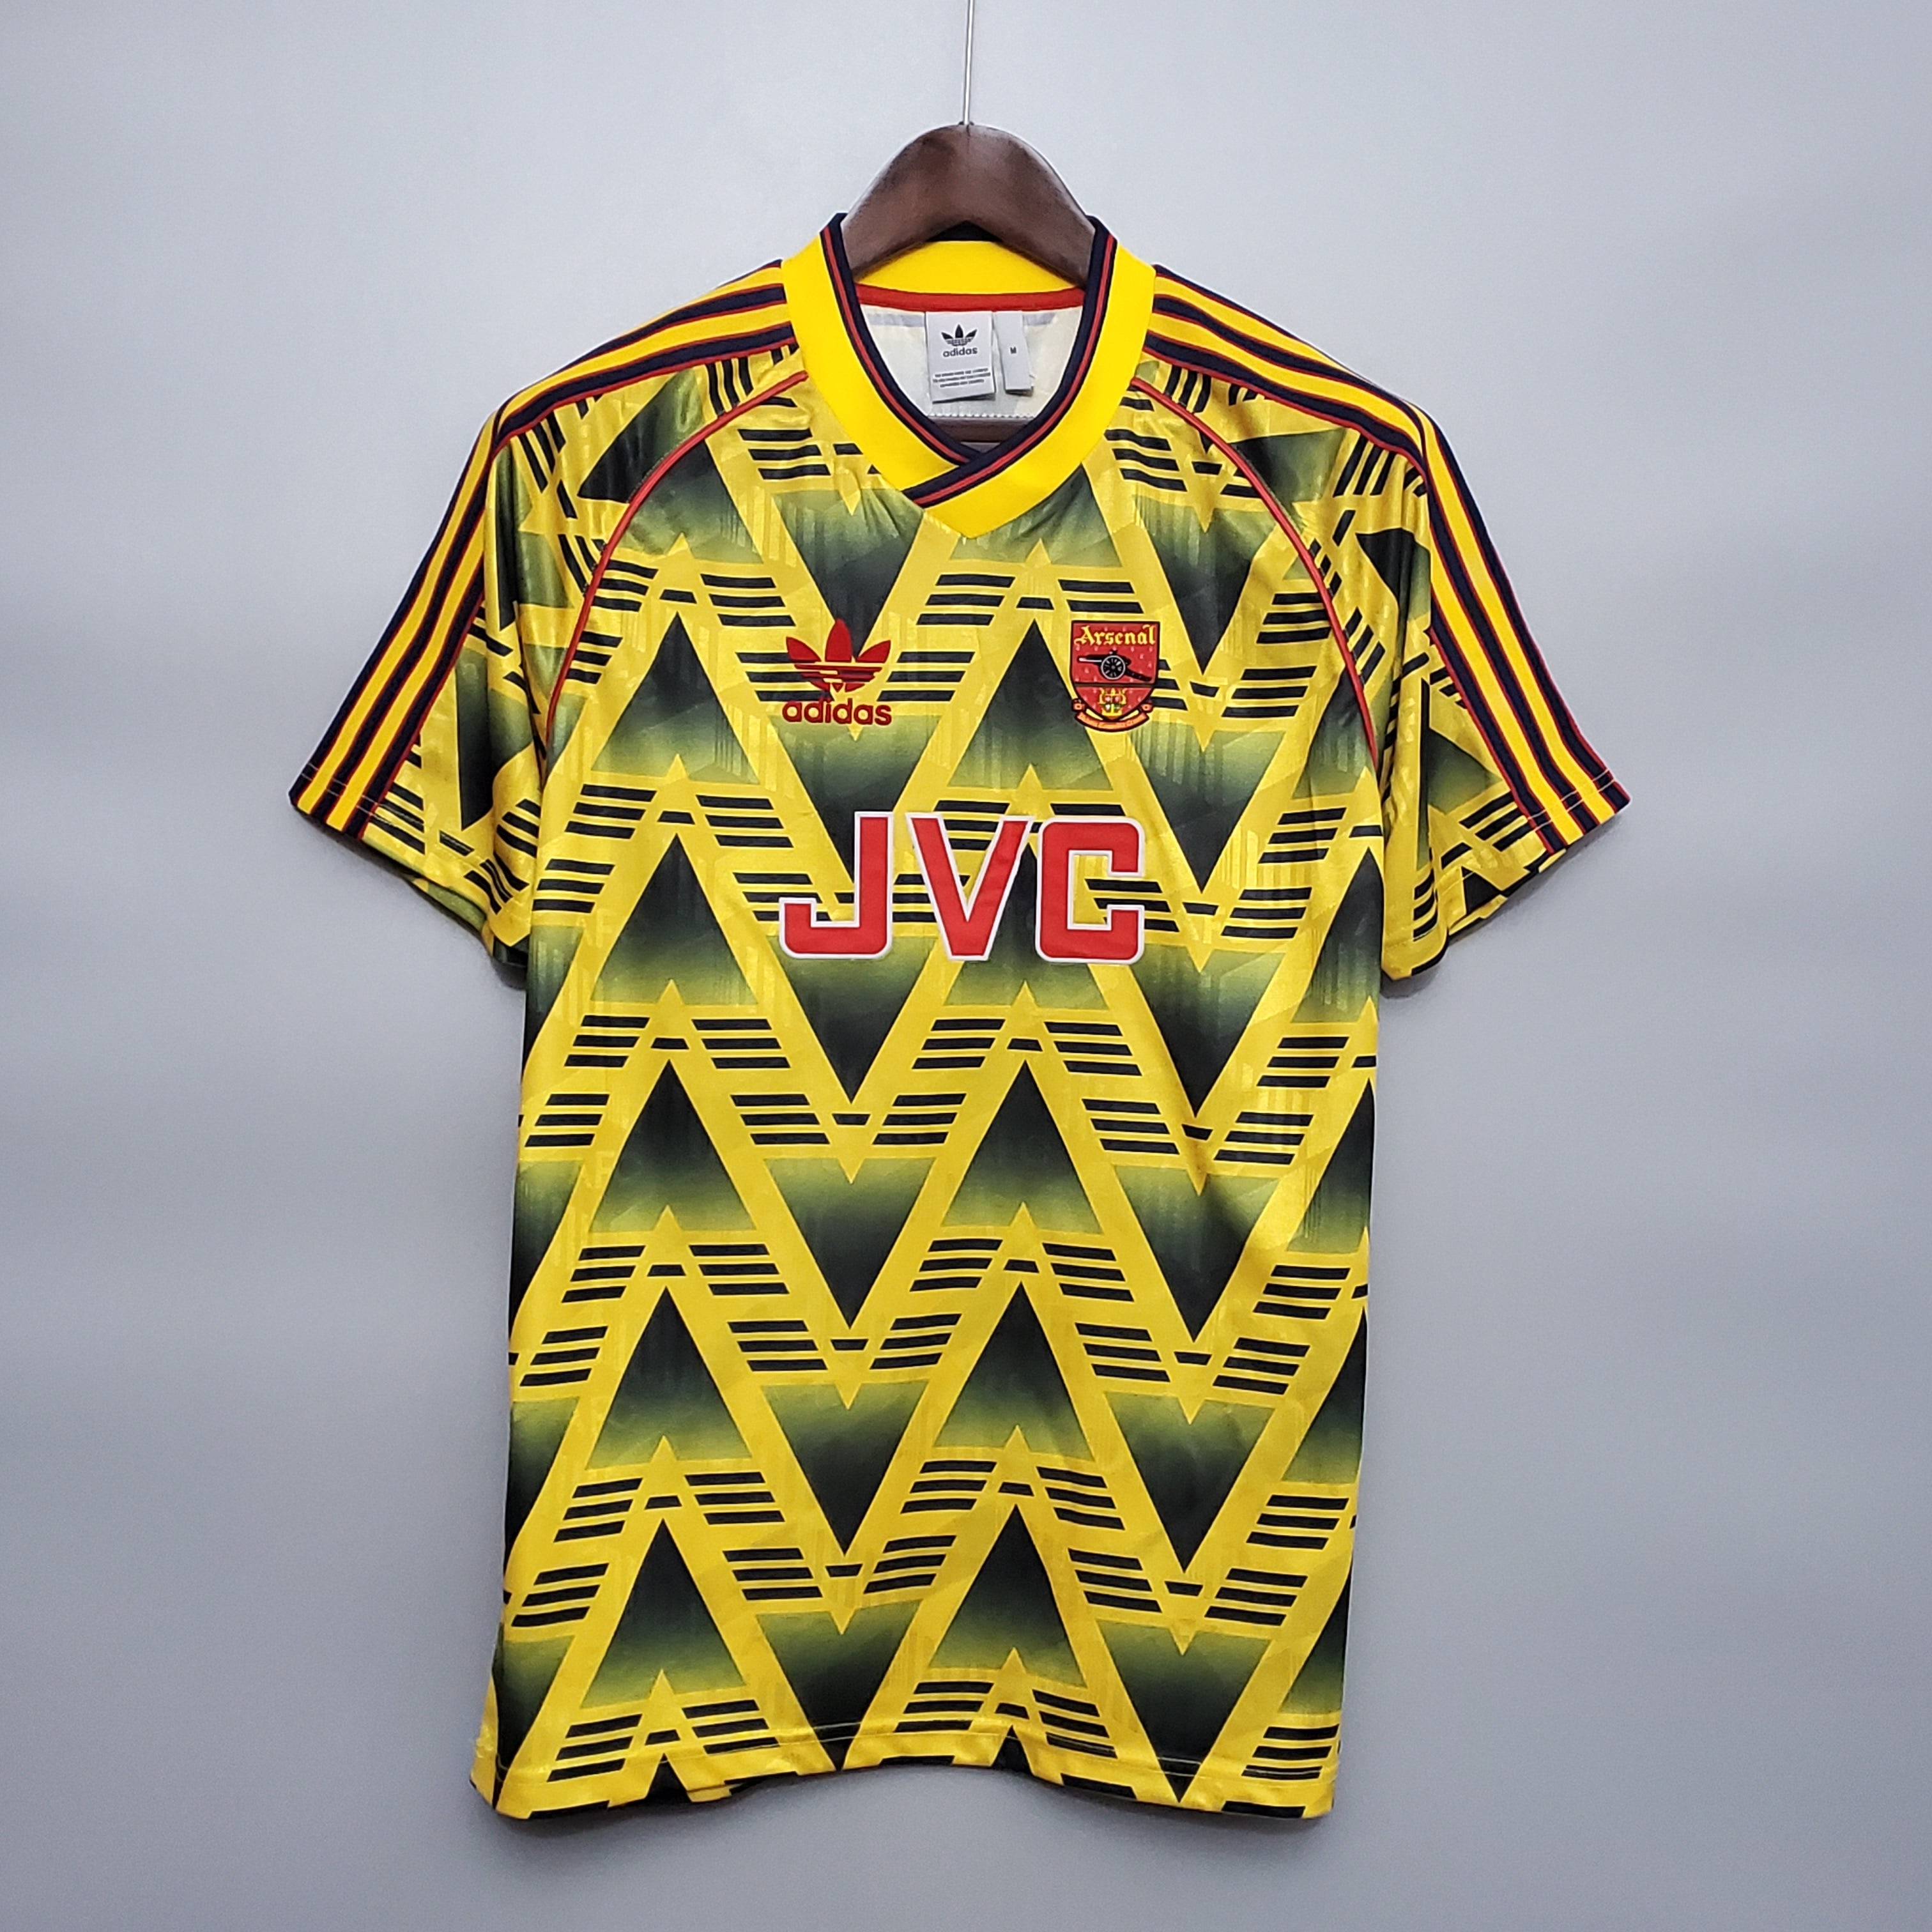 One of Adidas' best ever designs: 4 Arsenal 'bruised banana' kit variants